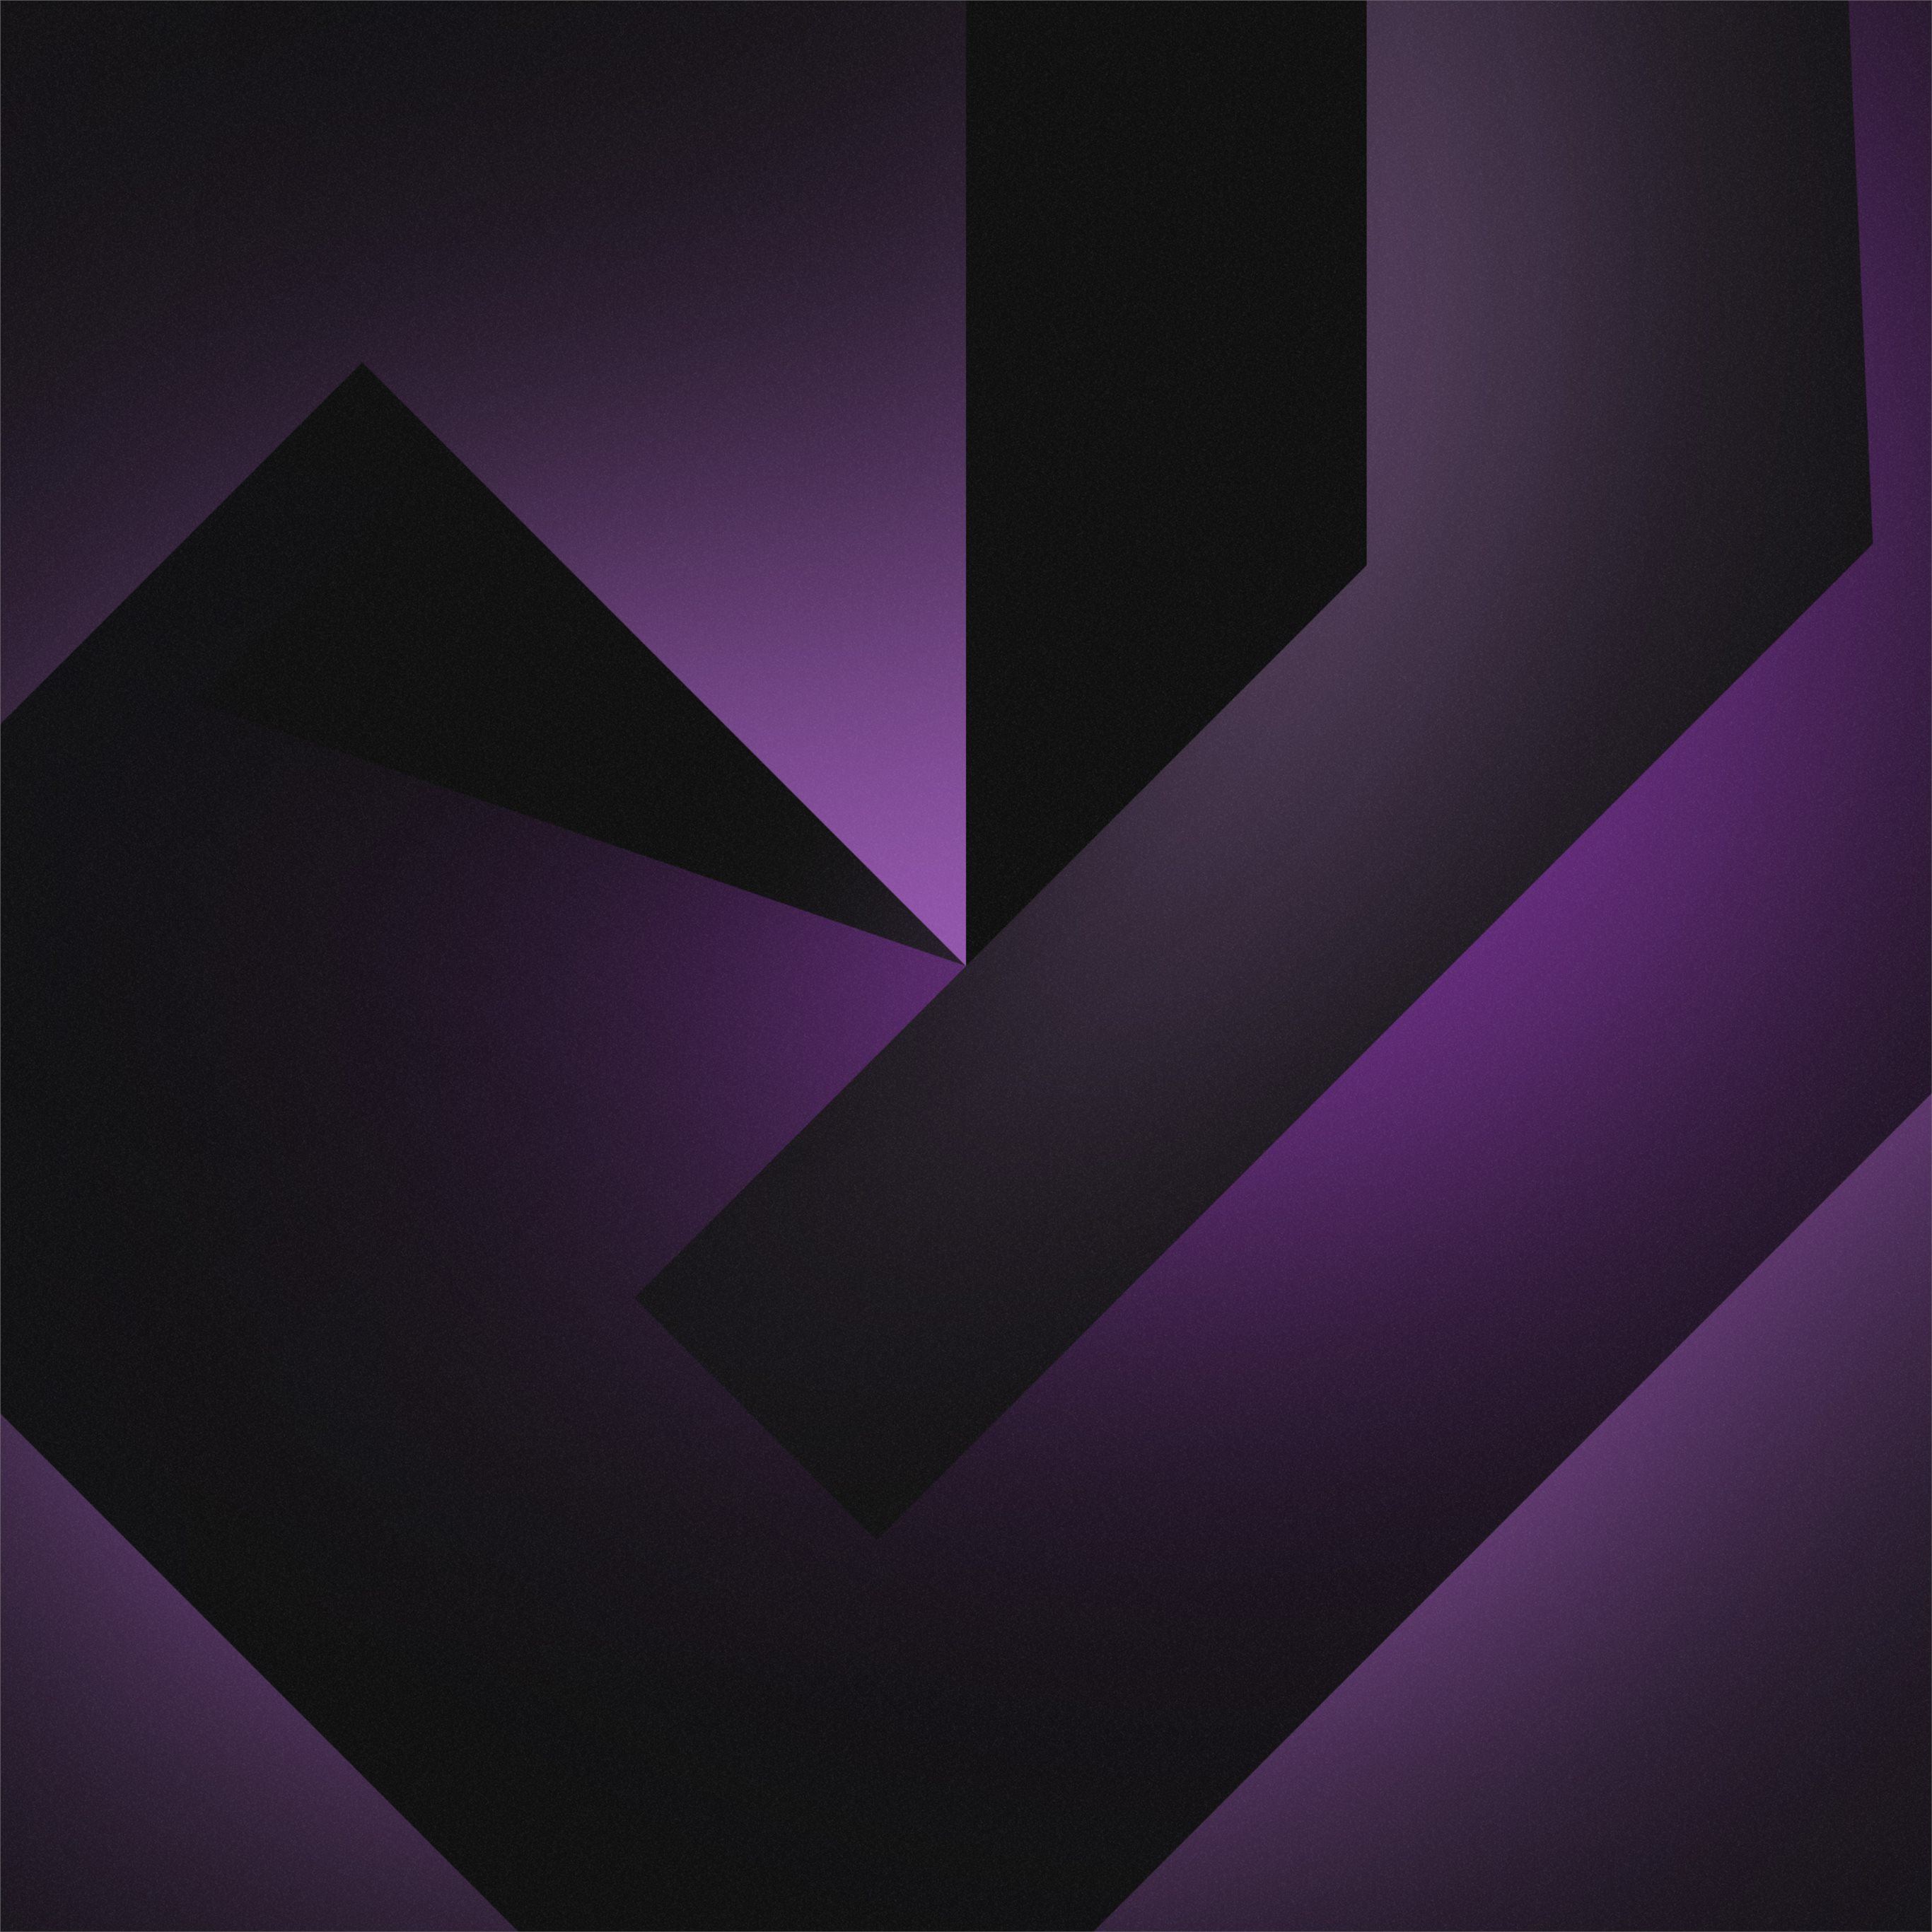 abstract dark purple 4k iPad Pro Wallpapers Free Download